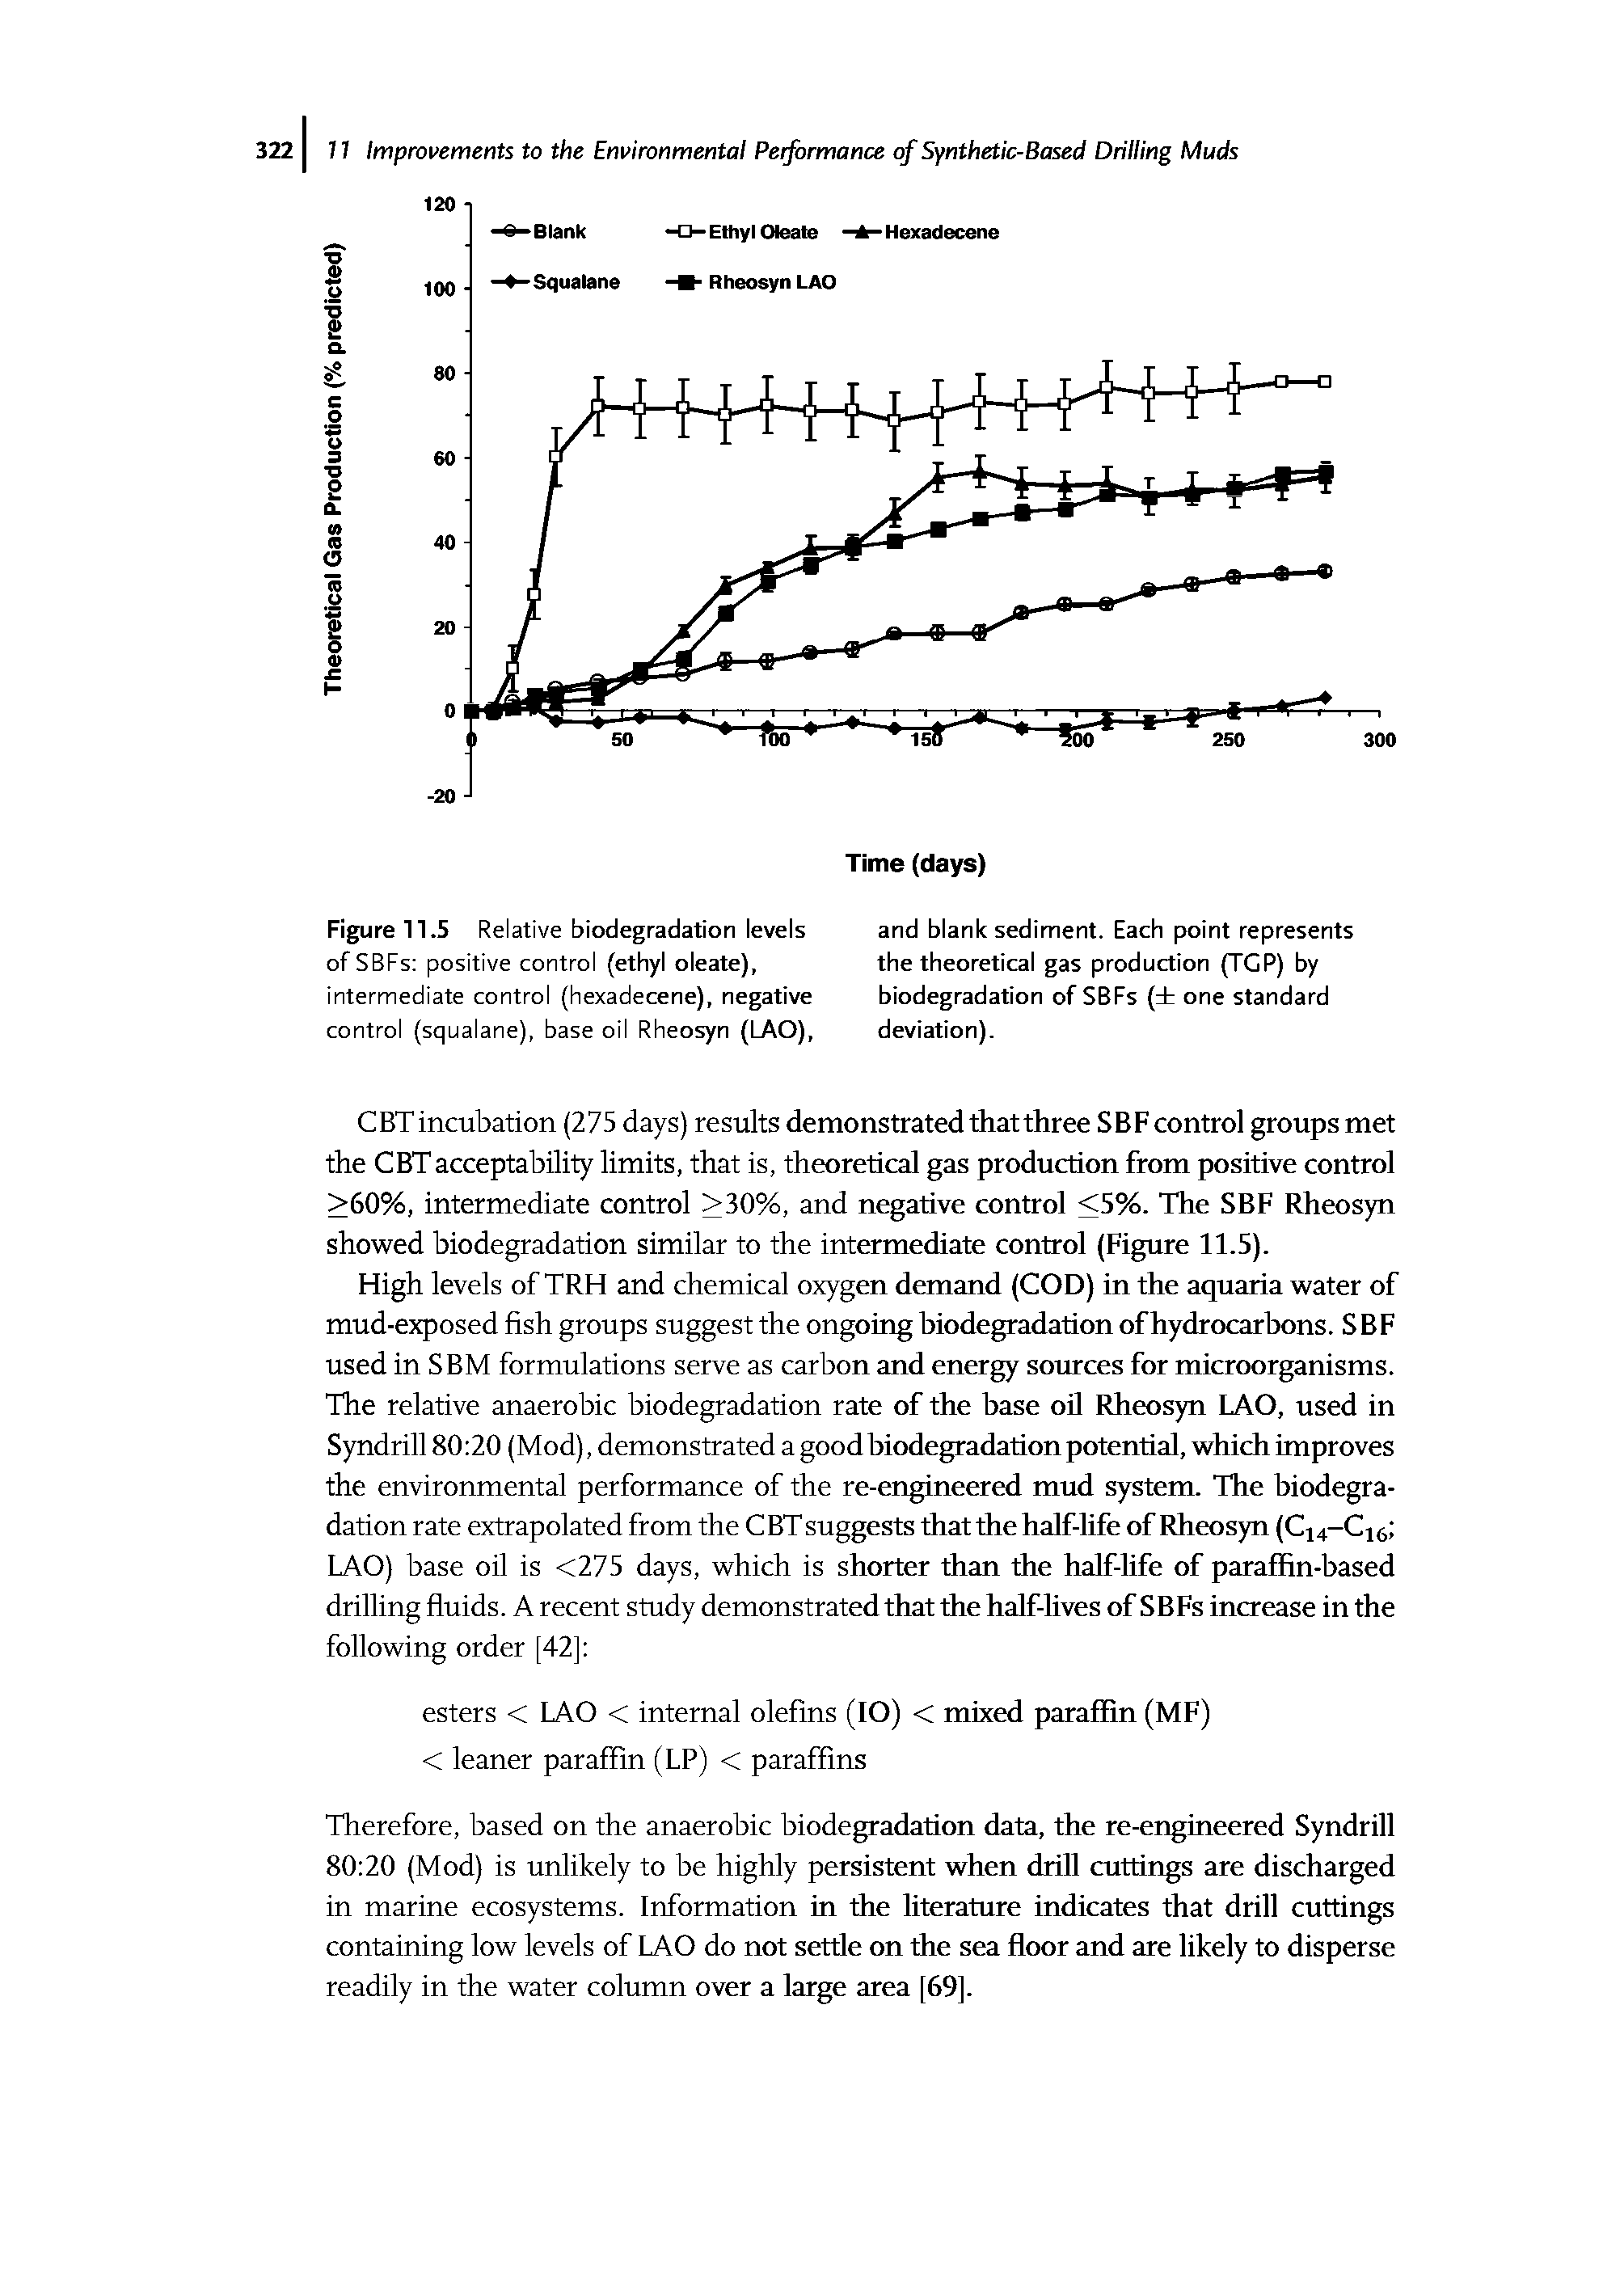 Figure .5 Relative biodegradation levels of SBFs positive control (ethyl oleate), intermediate control (hexadecene), negative control (squalane), base oil Rheosyn (LAO),...